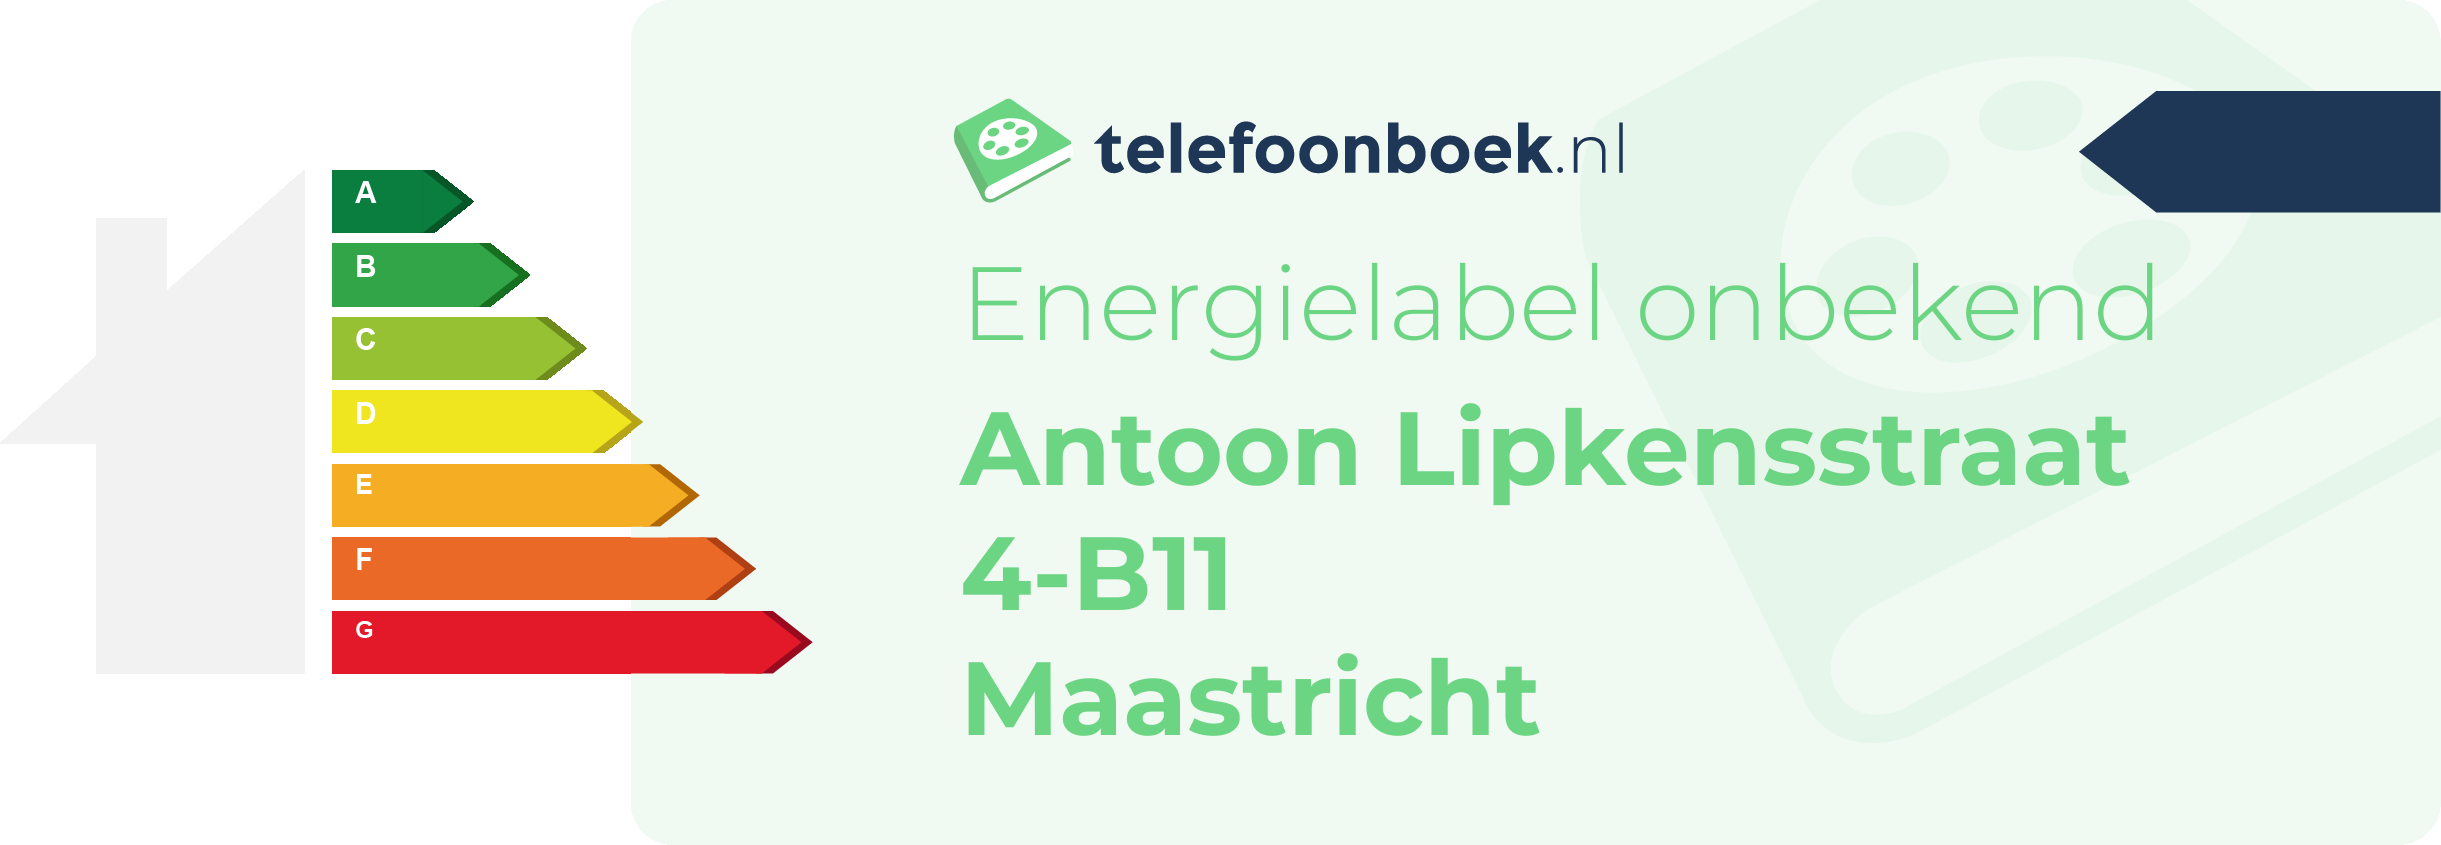 Energielabel Antoon Lipkensstraat 4-B11 Maastricht